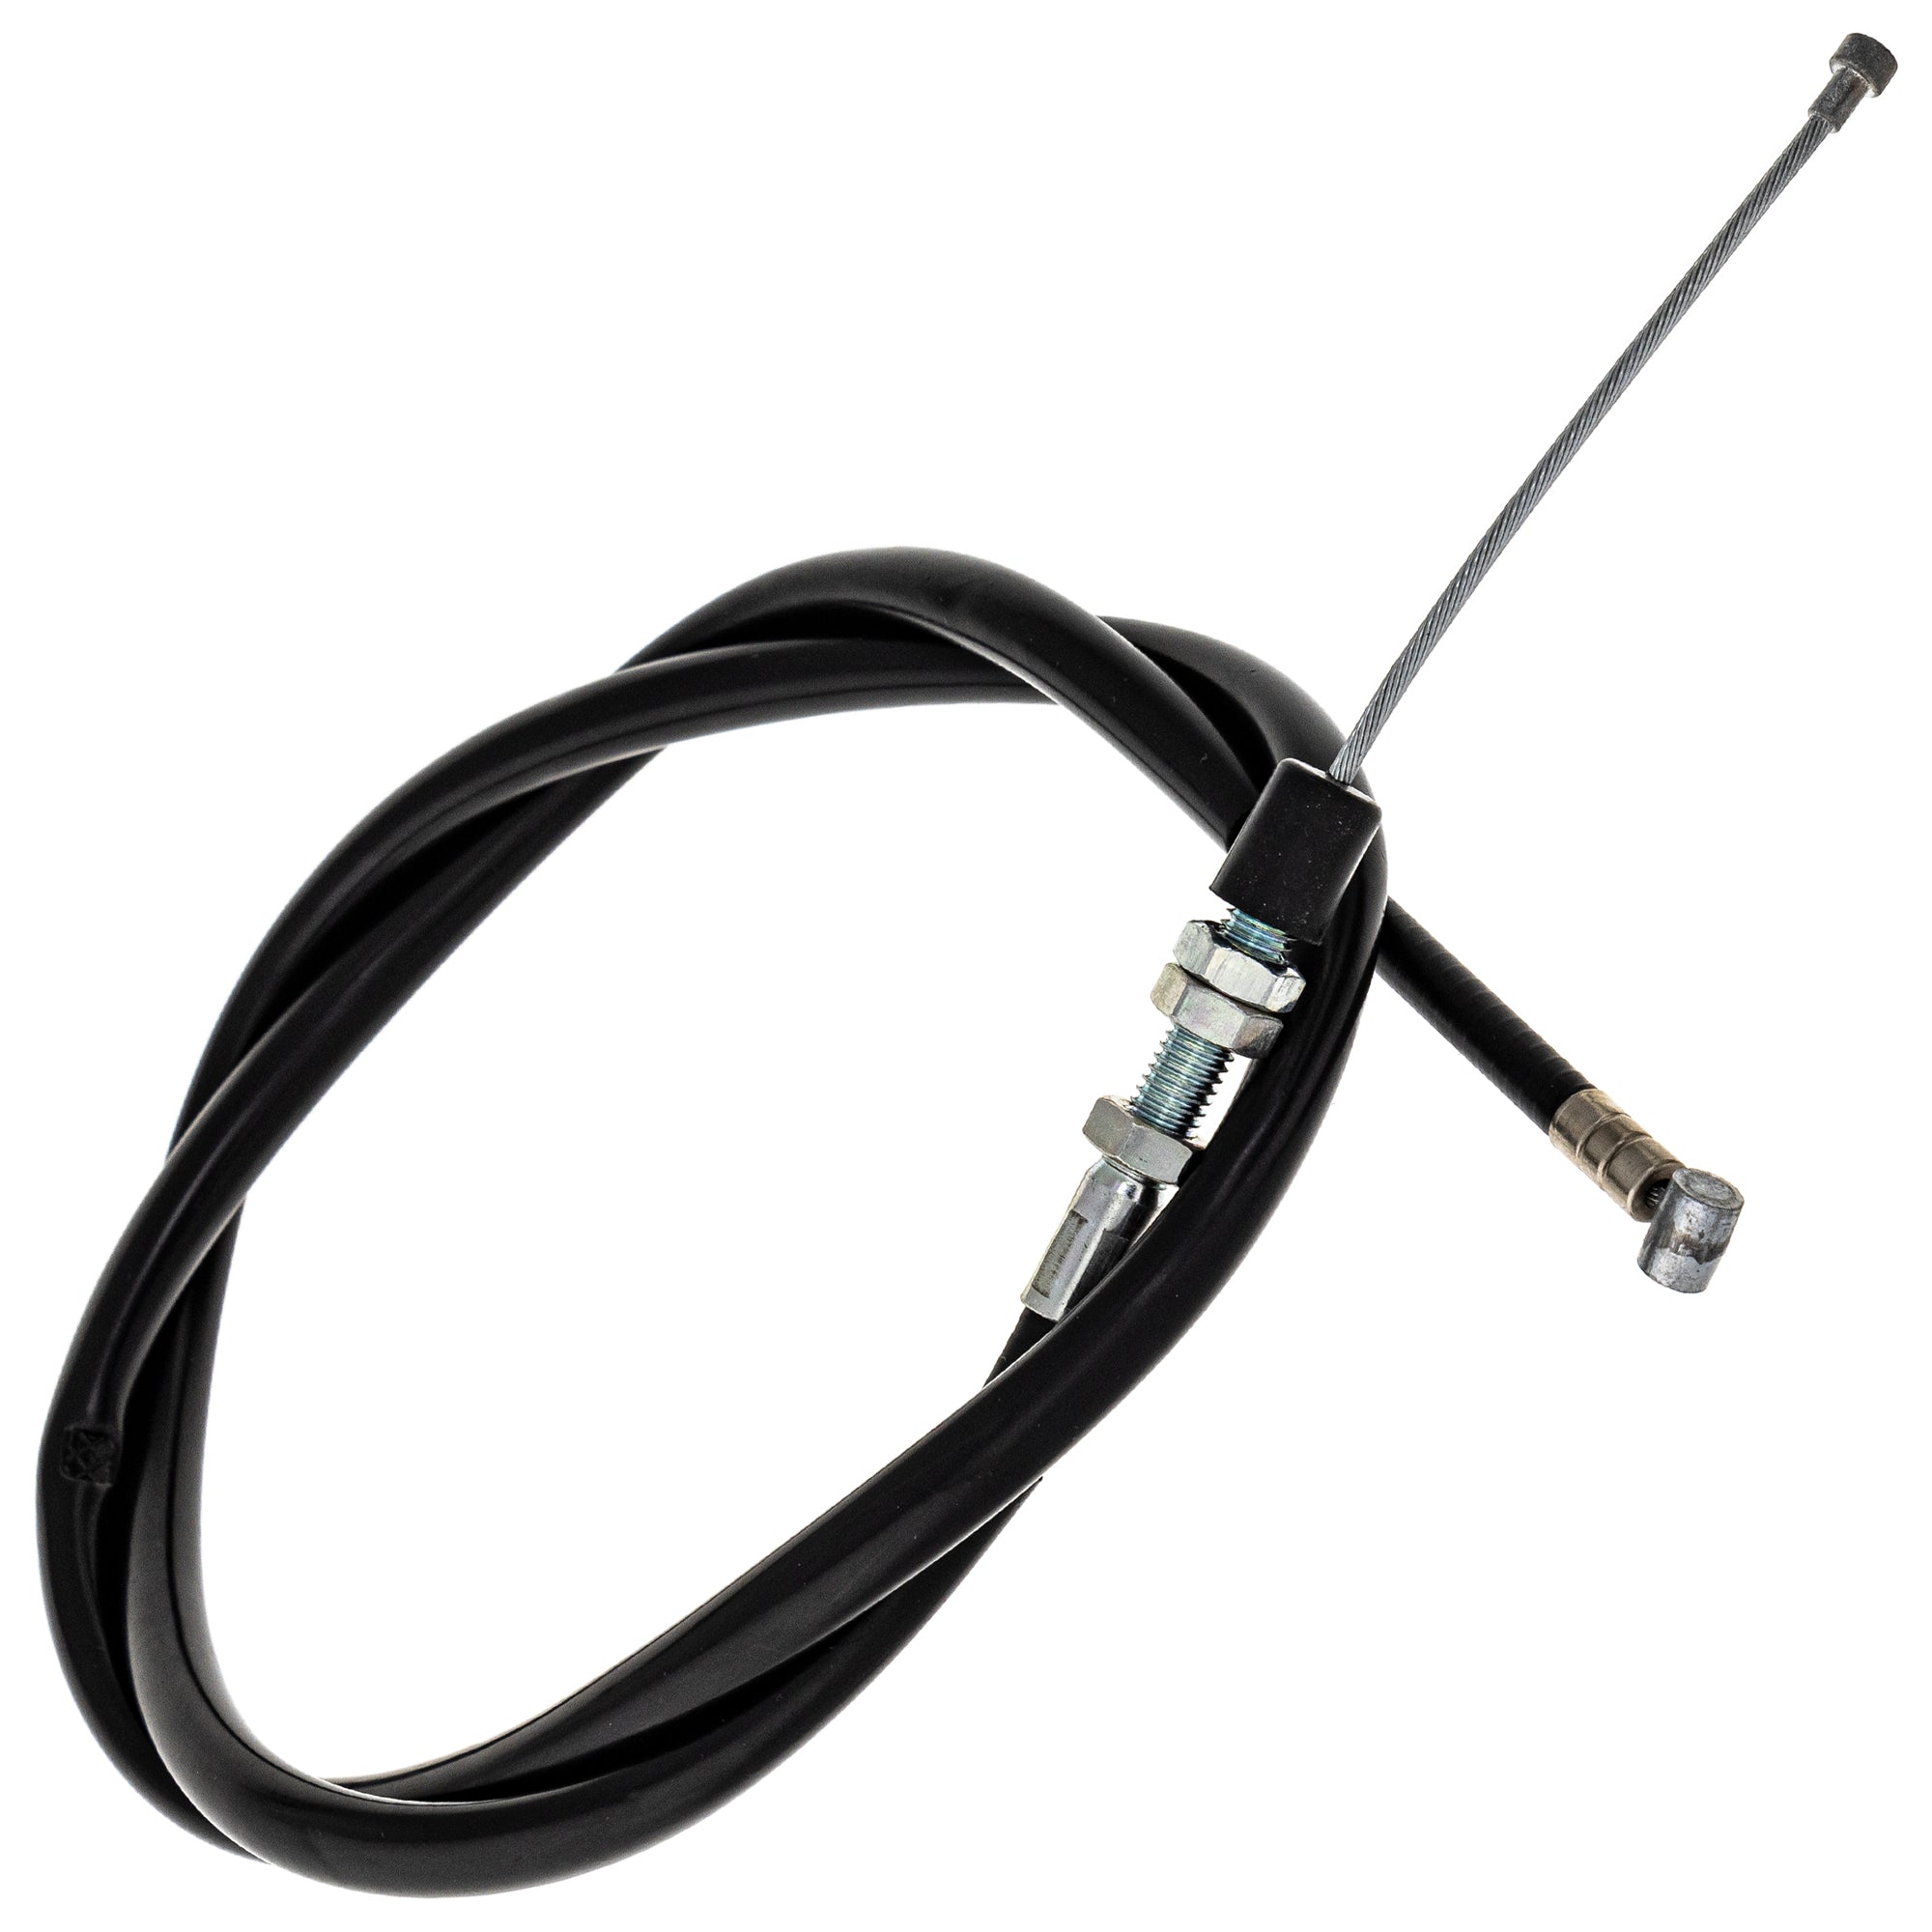 Clutch Cable for Yamaha TT600 Seca 650 Virago 535 535S 55U-26335-01-00